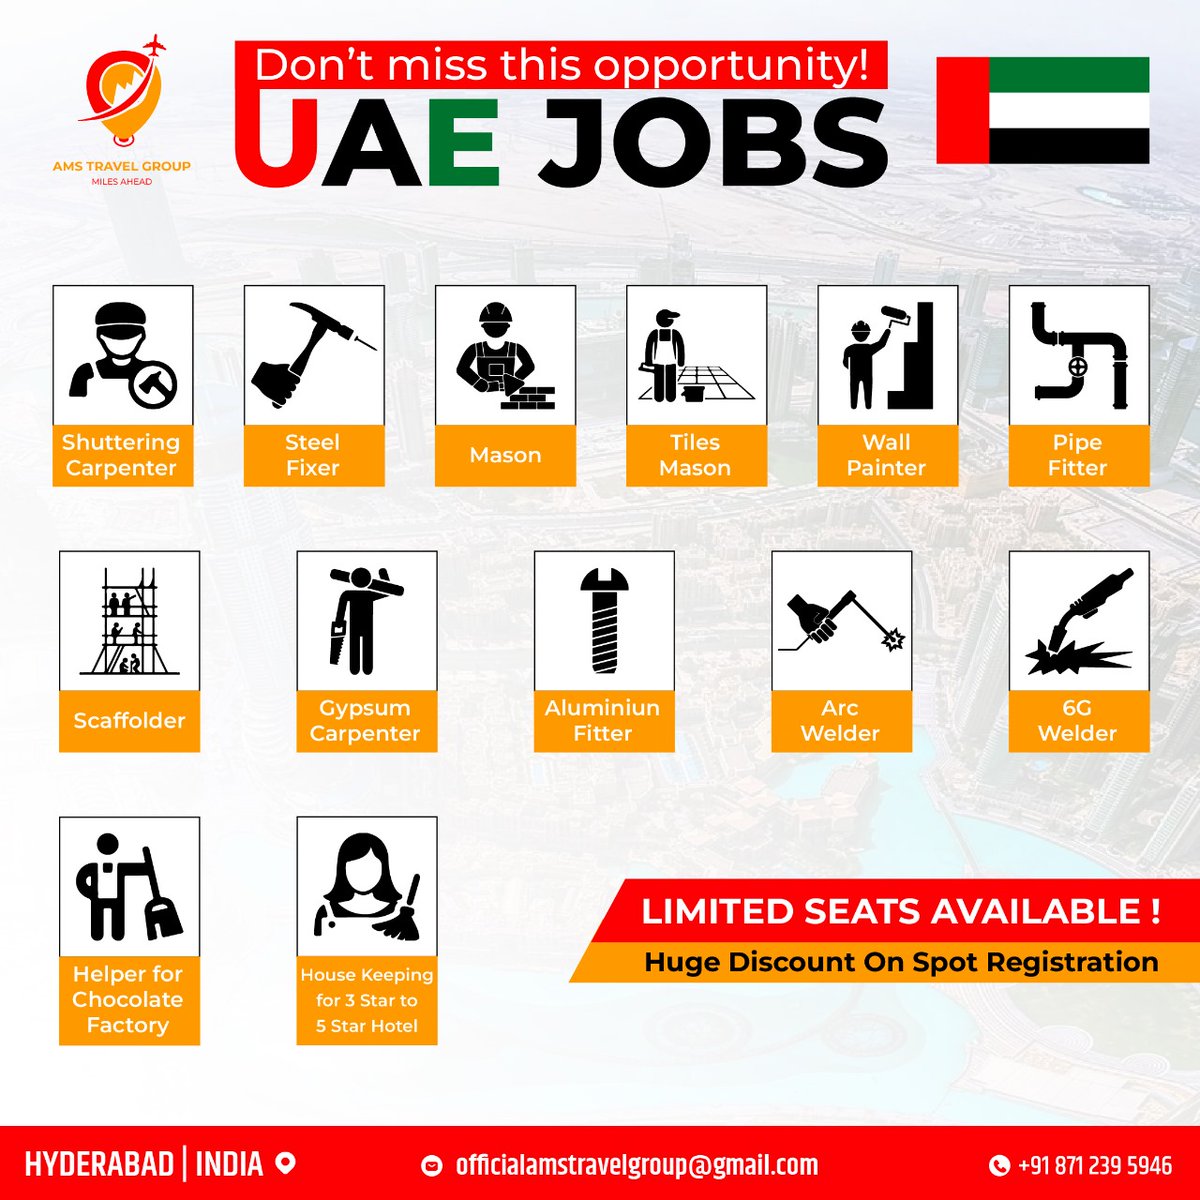 Jobs in UAE... @amstravelgroup Follow for more abroad job Opportunities @amstravelgroup #amstravelgroup #amsoverseas #dubai #uae #jobs #jobsindubai #jobvacancy #carpenterjobs #welderjobs #plumberjobs #housekeepingjobs #trending #viraljobs